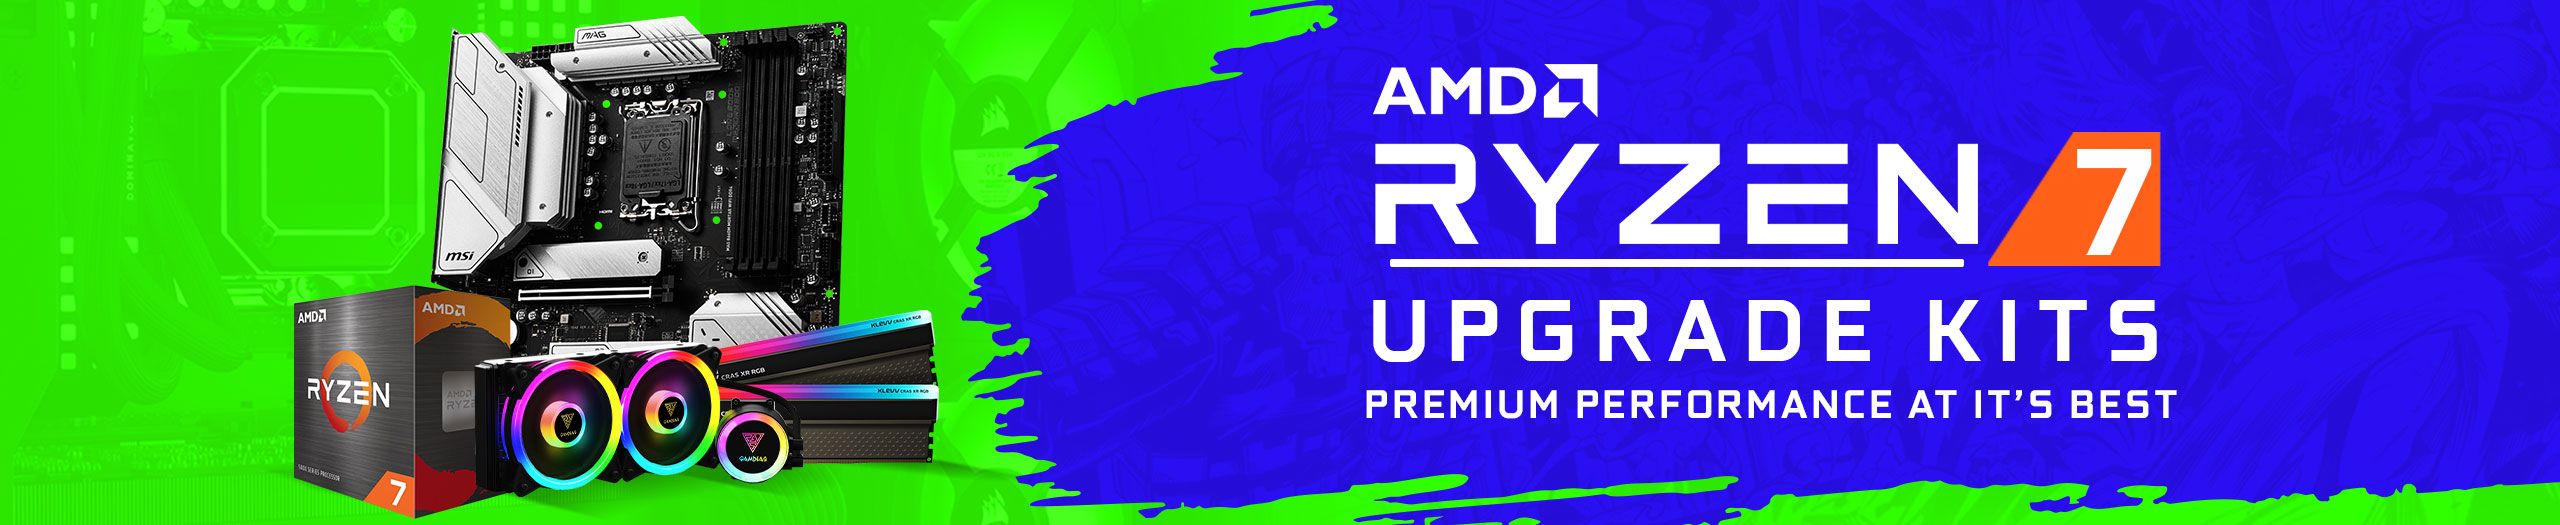 AMD Ryzen 7 Upgrade Kits